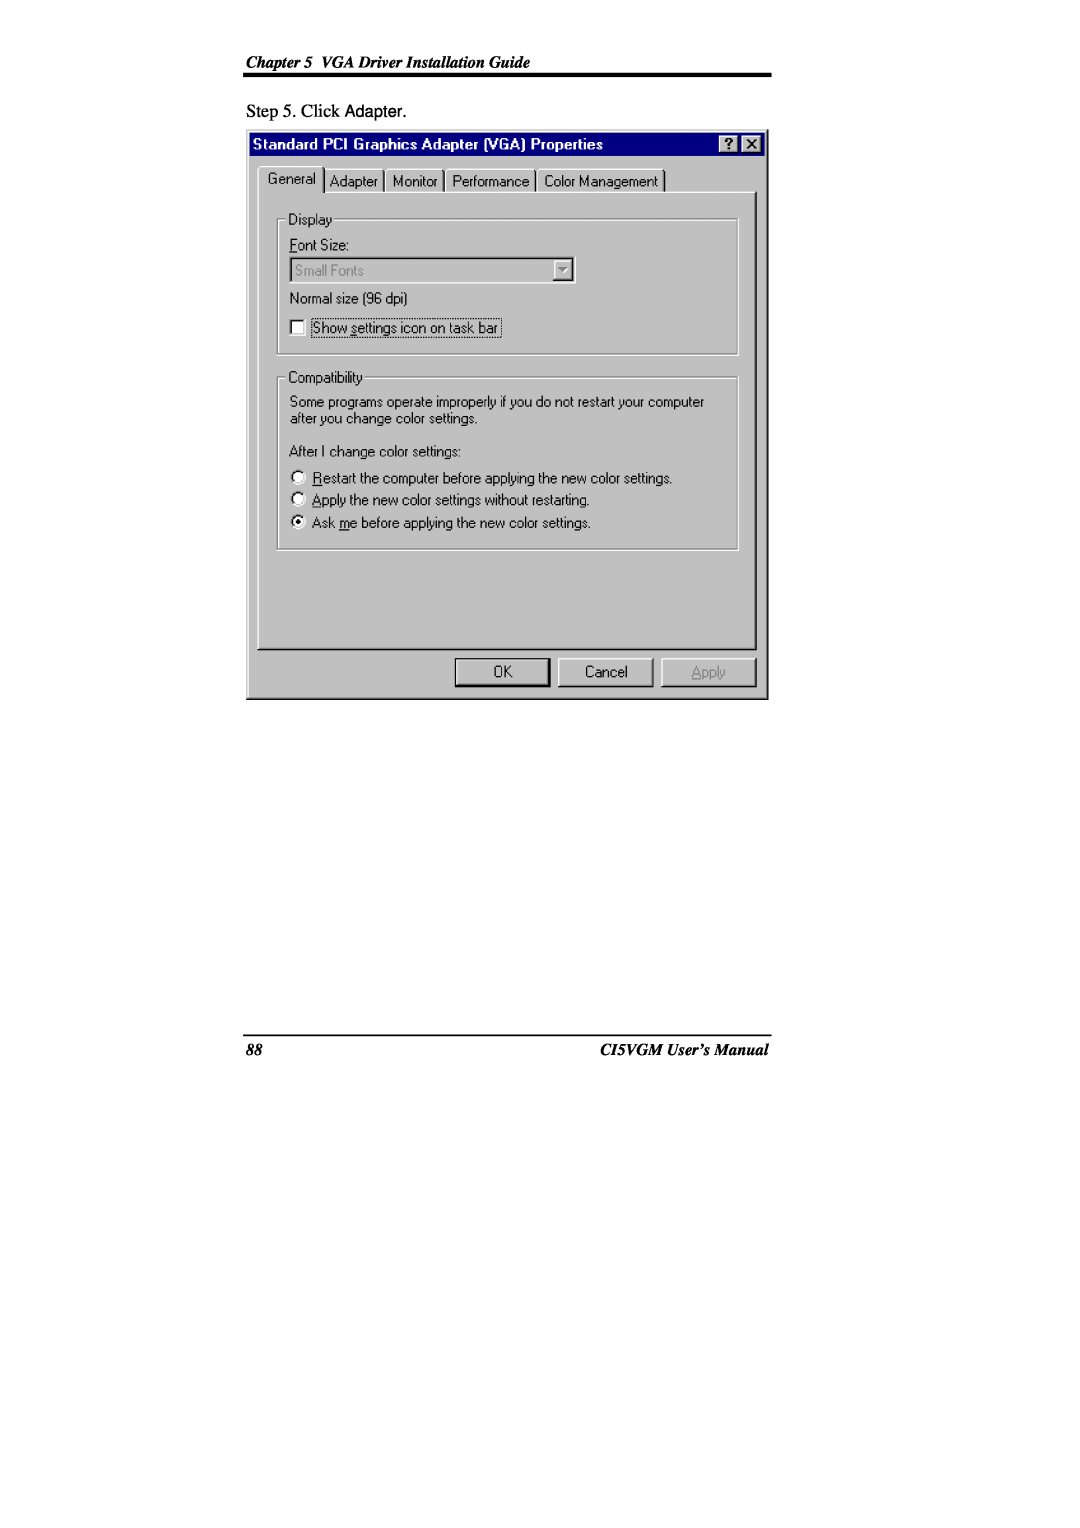 IBM CI5VGM Series user manual Click Adapter, VGA Driver Installation Guide, CI5VGM User’s Manual 